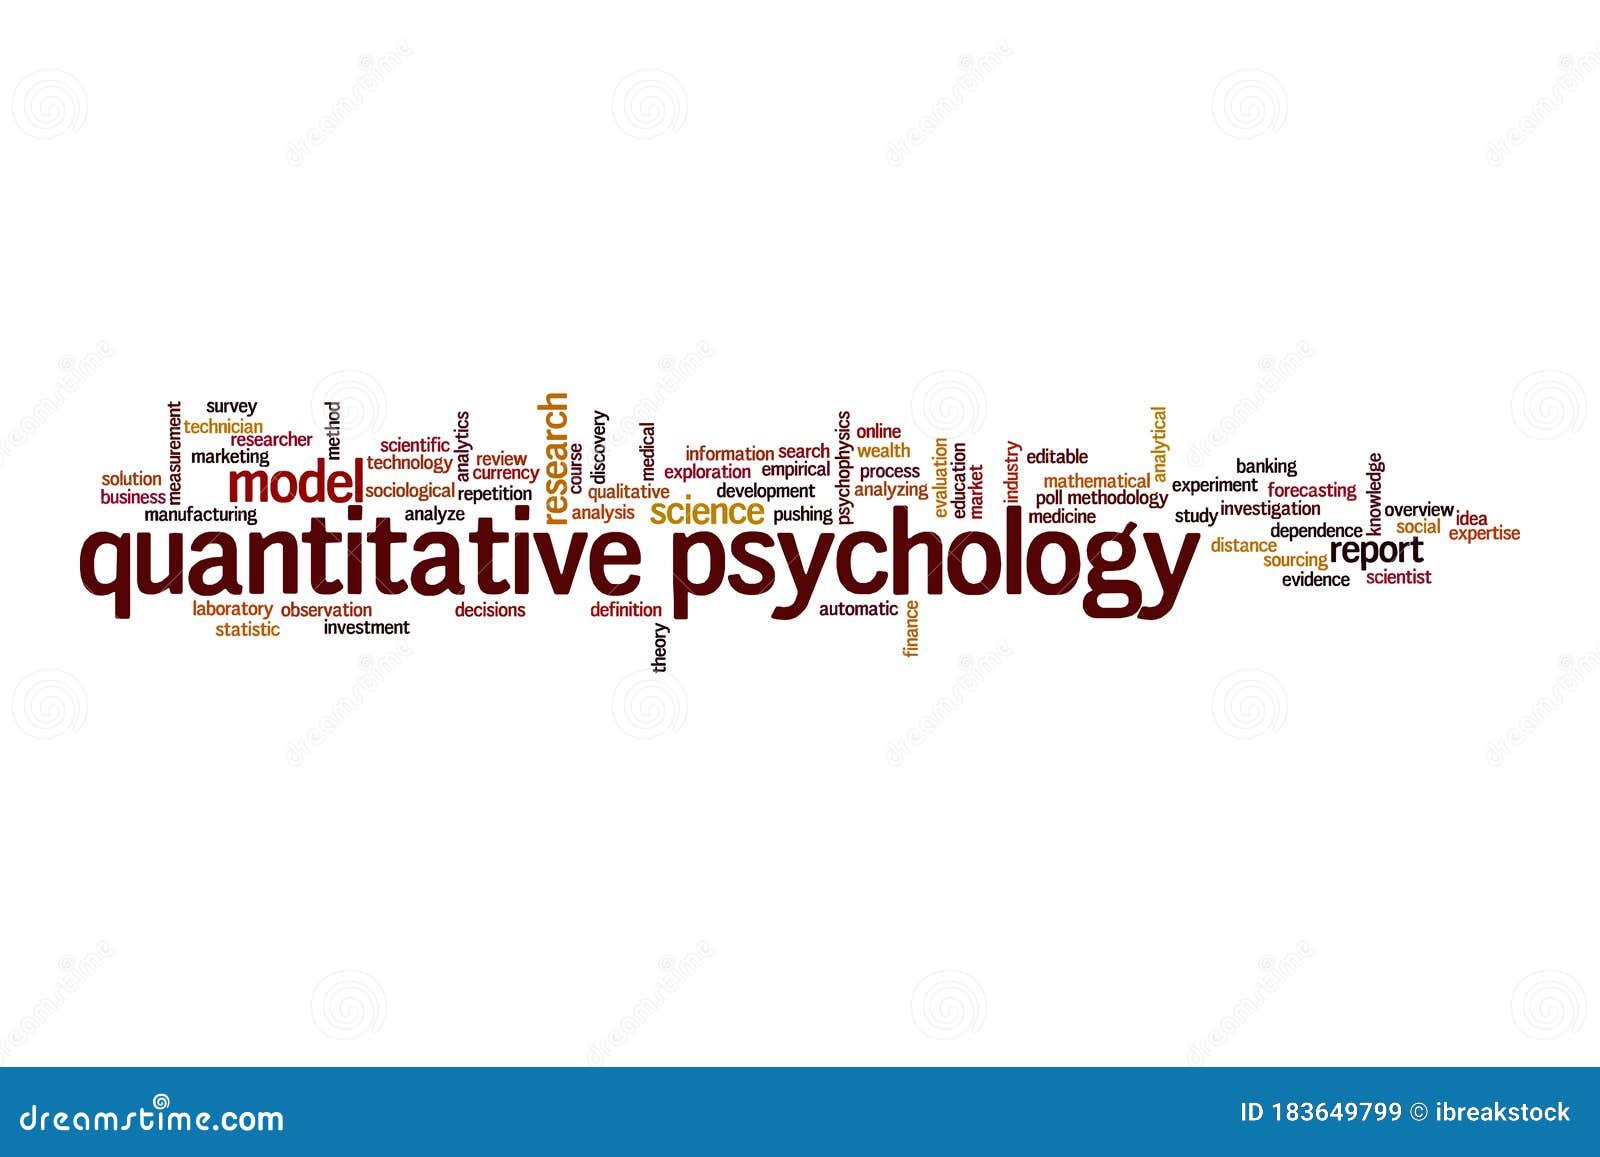 quantitative psychology dissertation ideas